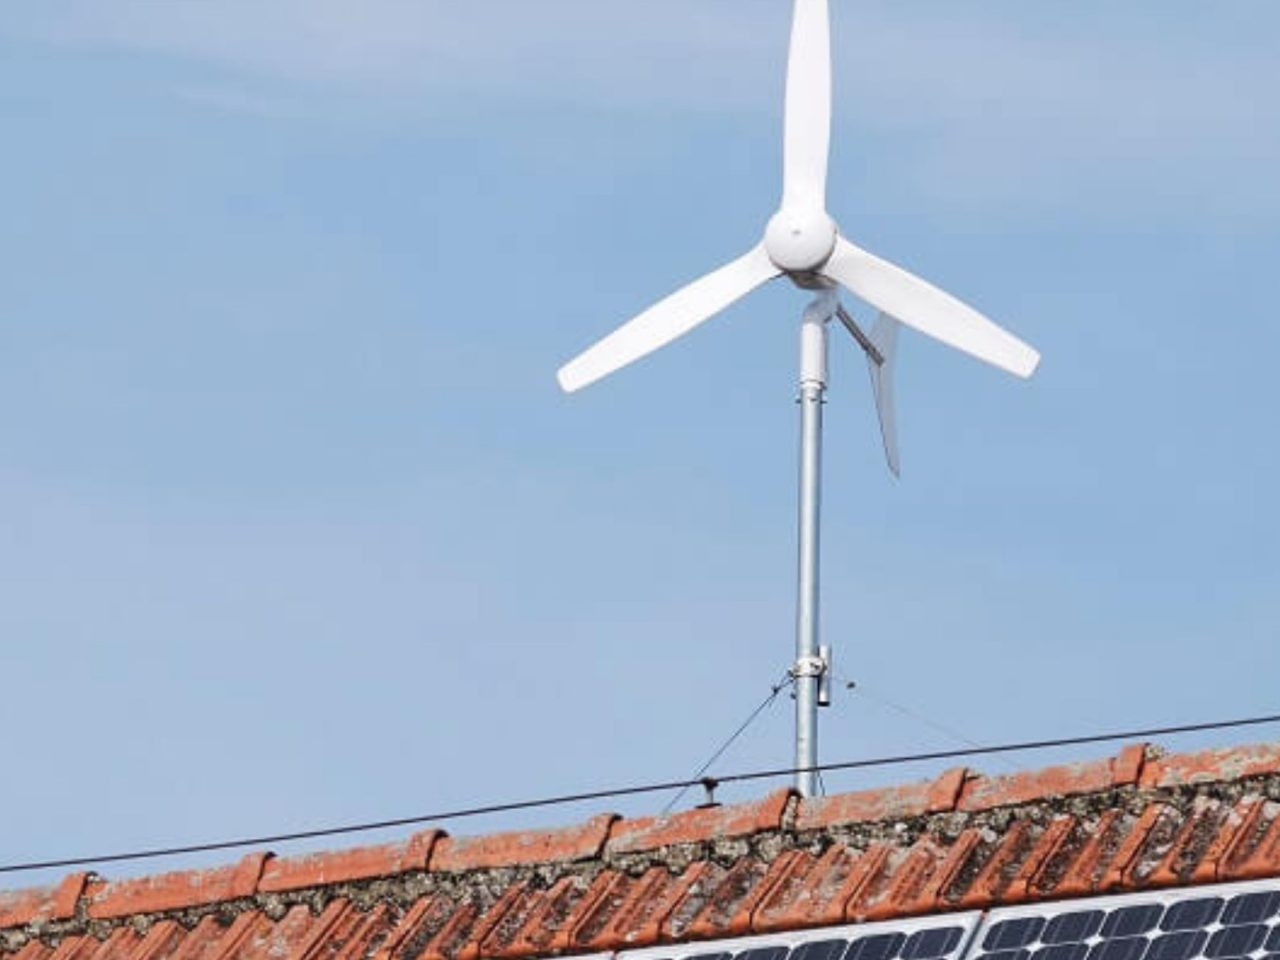 Rooftop Wind Turbine: The Wonderkid in Town